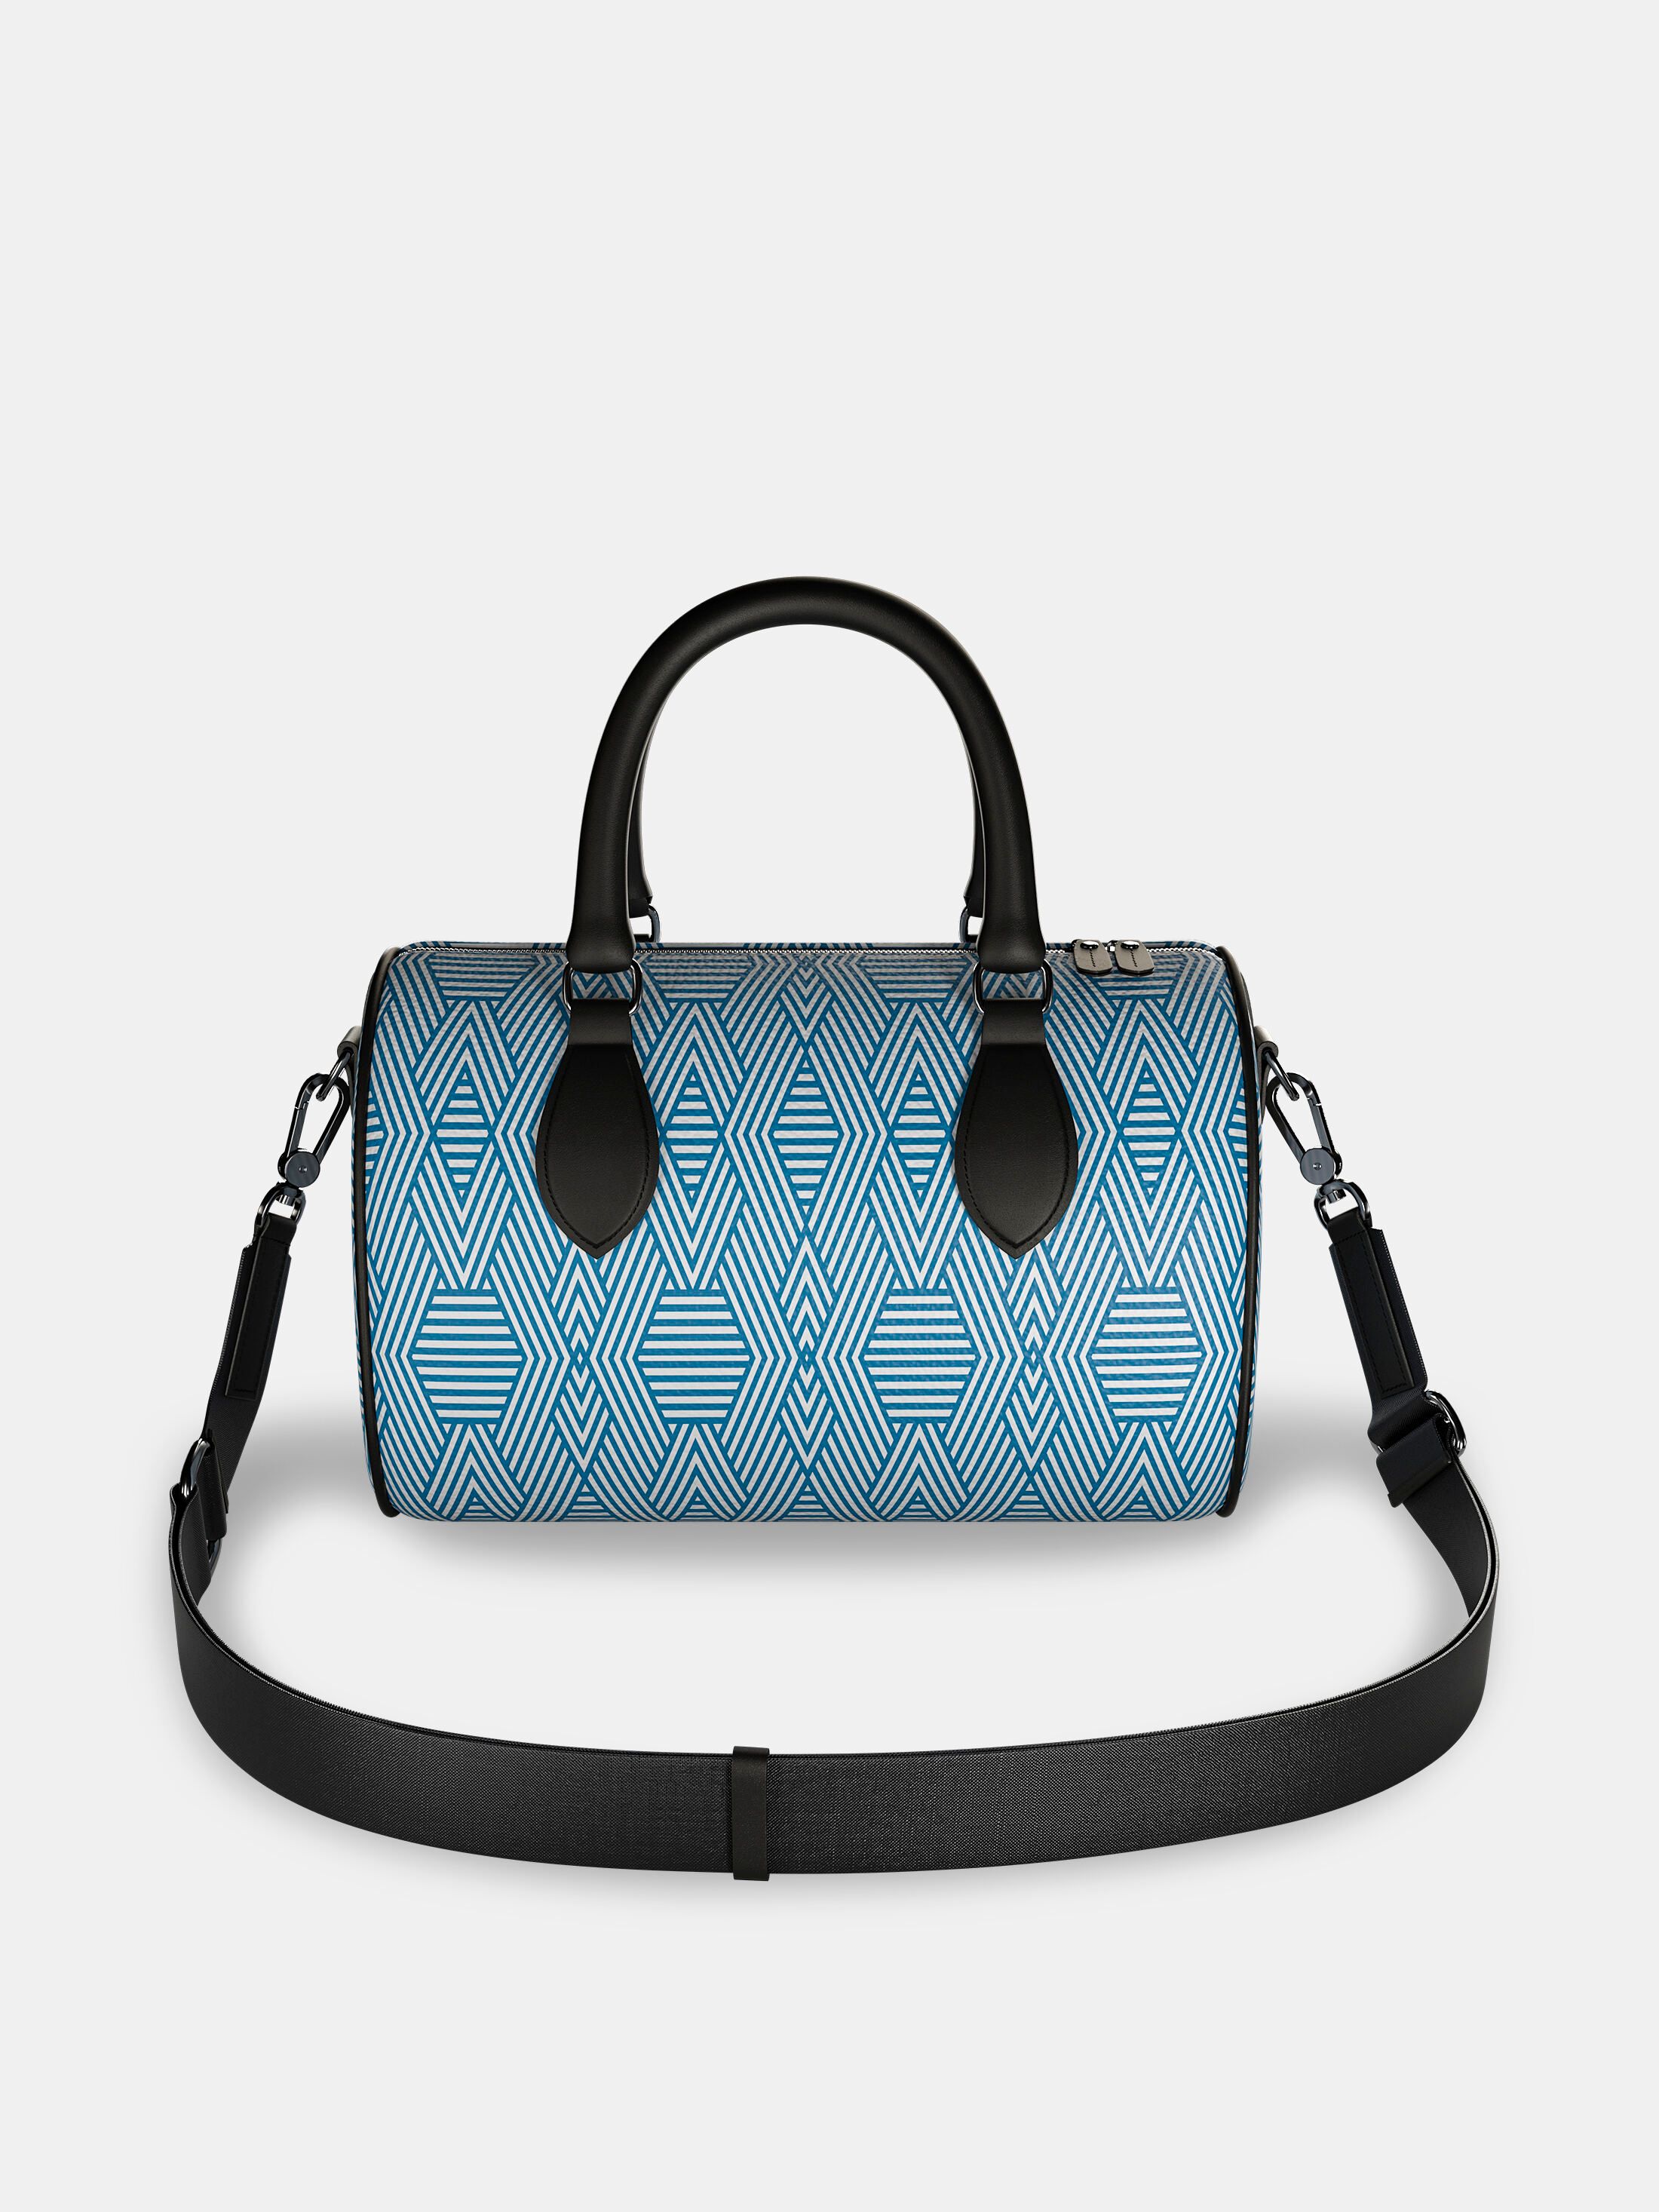 design your own custom small duffle bag